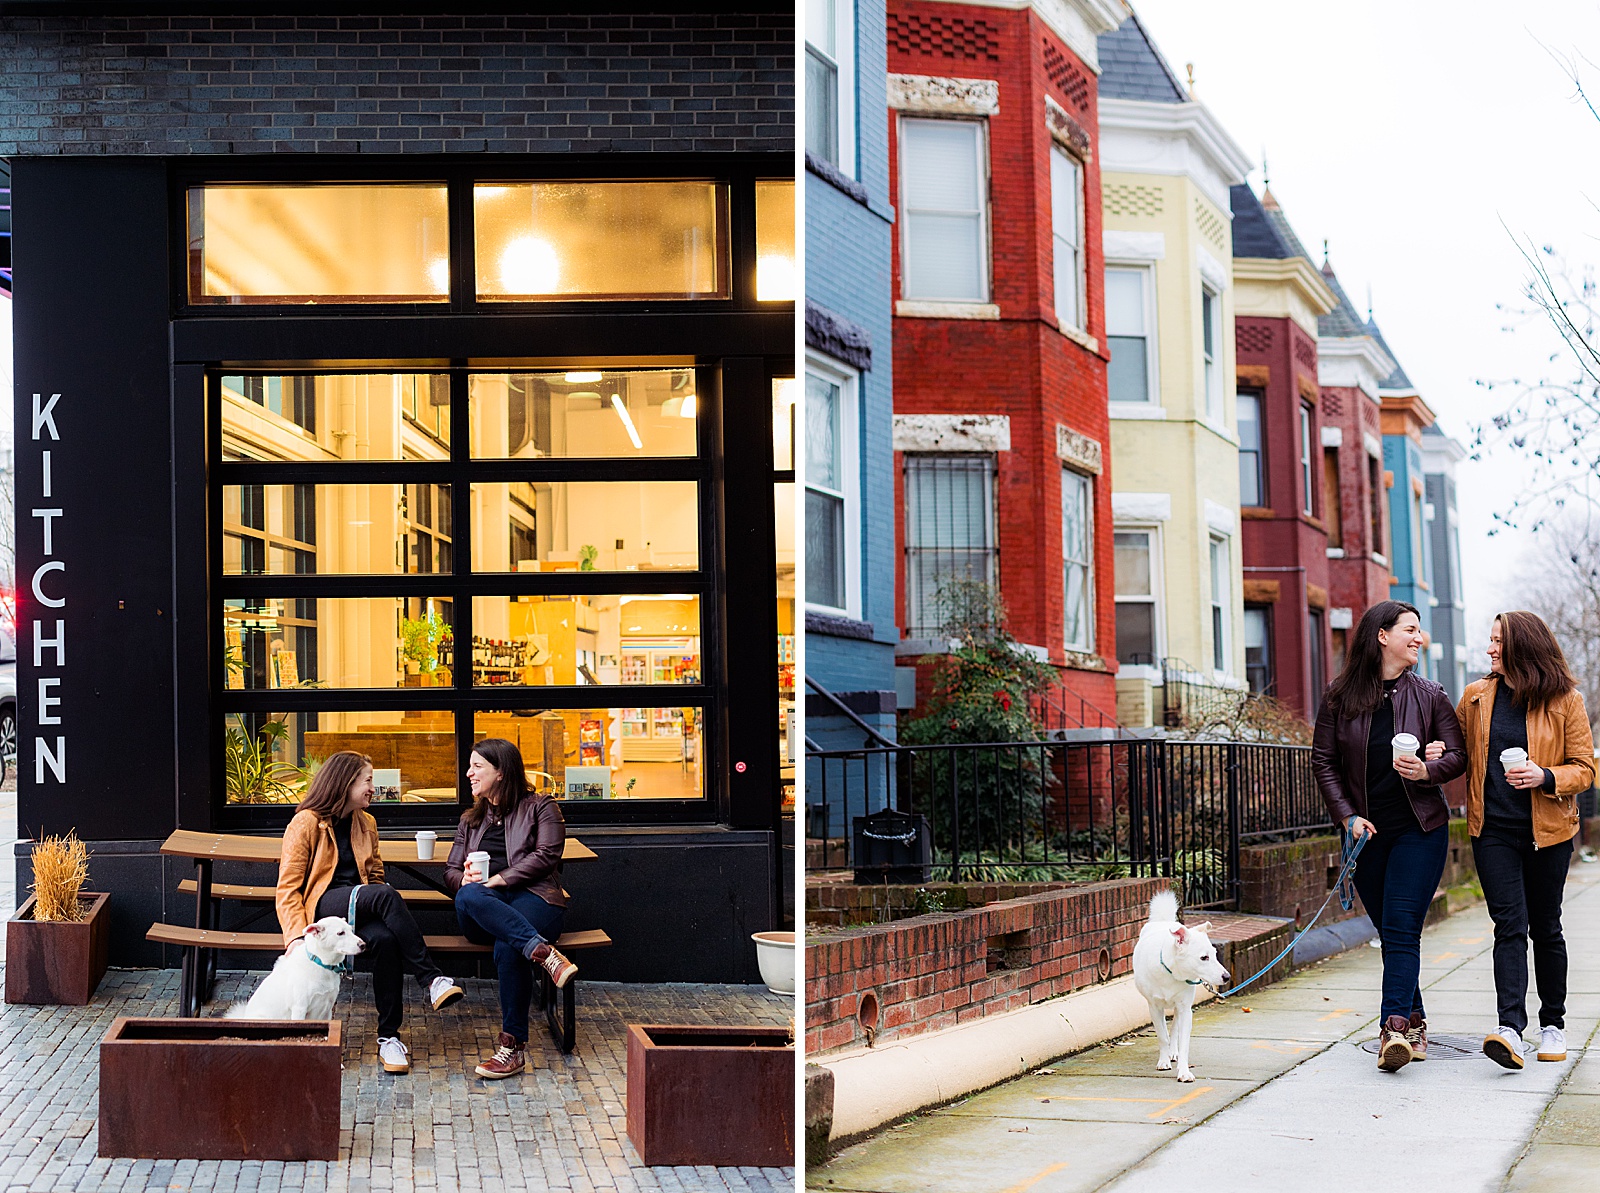 DC LGBTQ couple enjoys a cup of coffee and walks around the Eckington neighborhood with their dog.